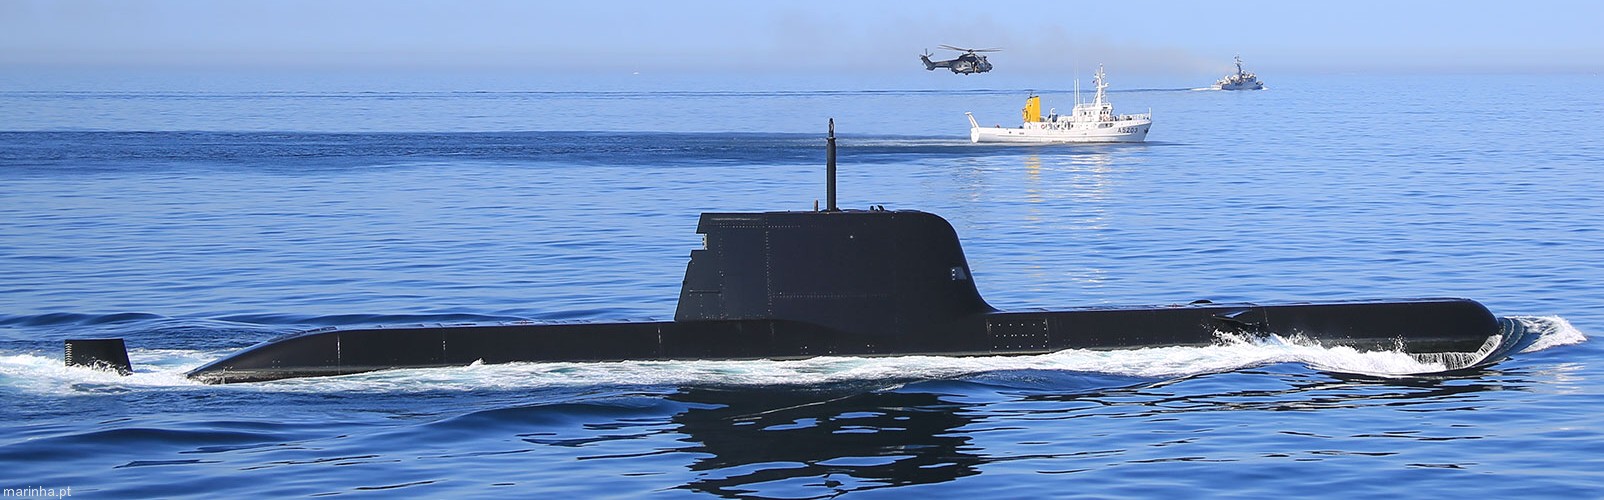 s-160 nrp tridente class type 209pn attack submarine ssk aip portuguese navy marinha 17